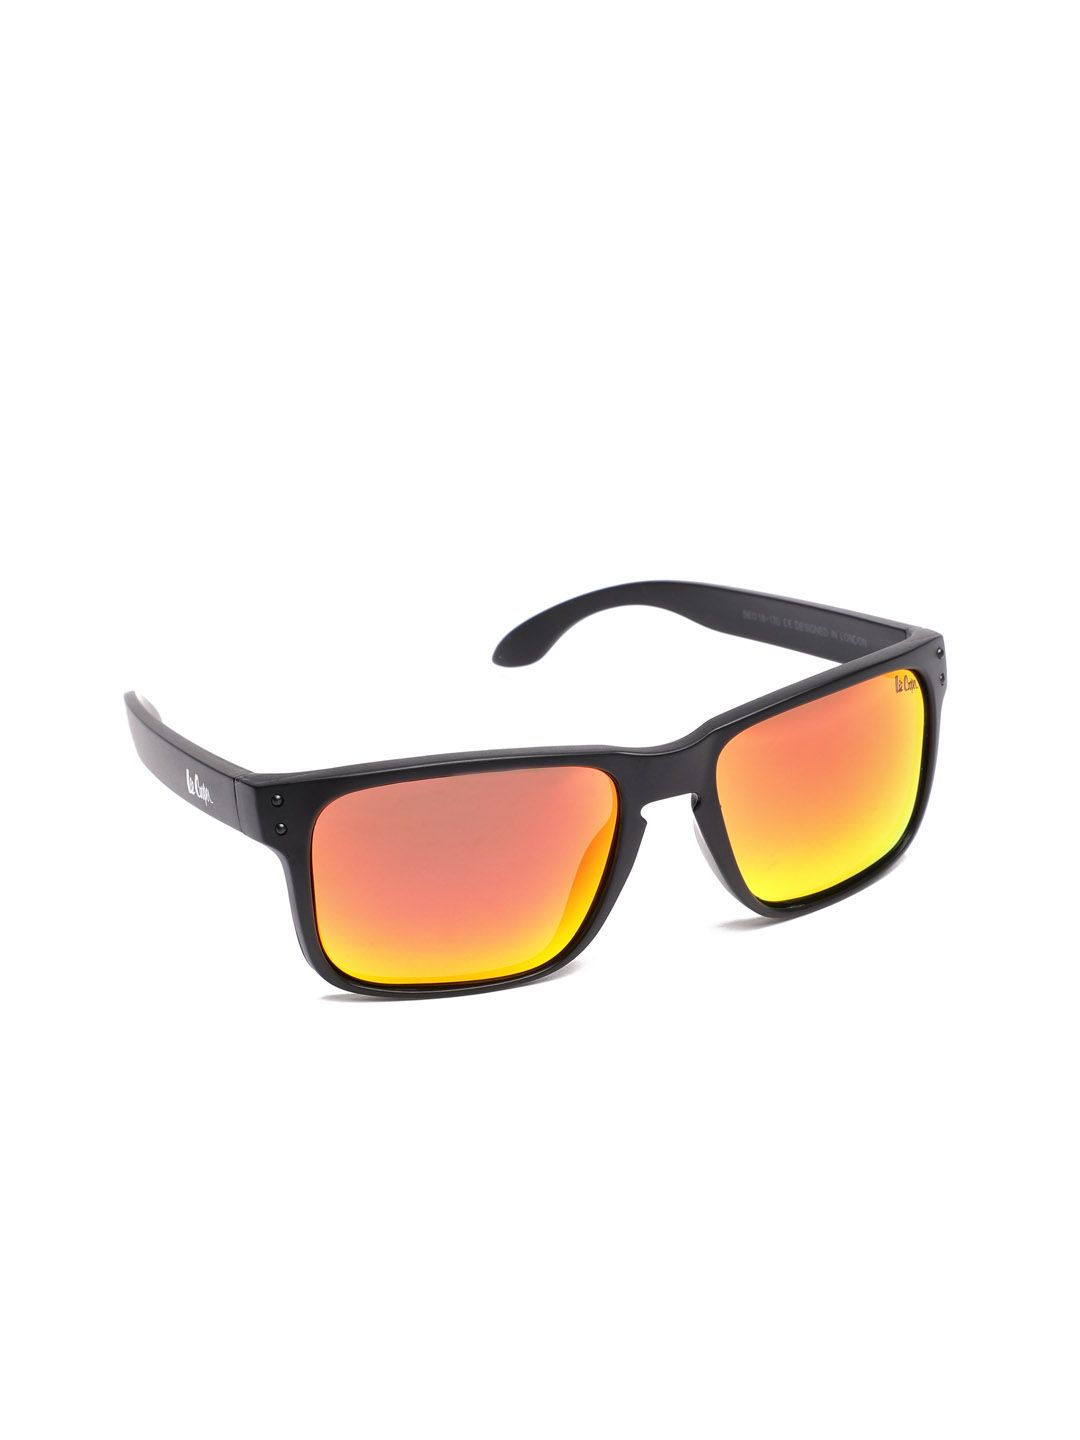 Lee Cooper Unisex Rectangle Sunglasses LC9137 BLKRED Price in India